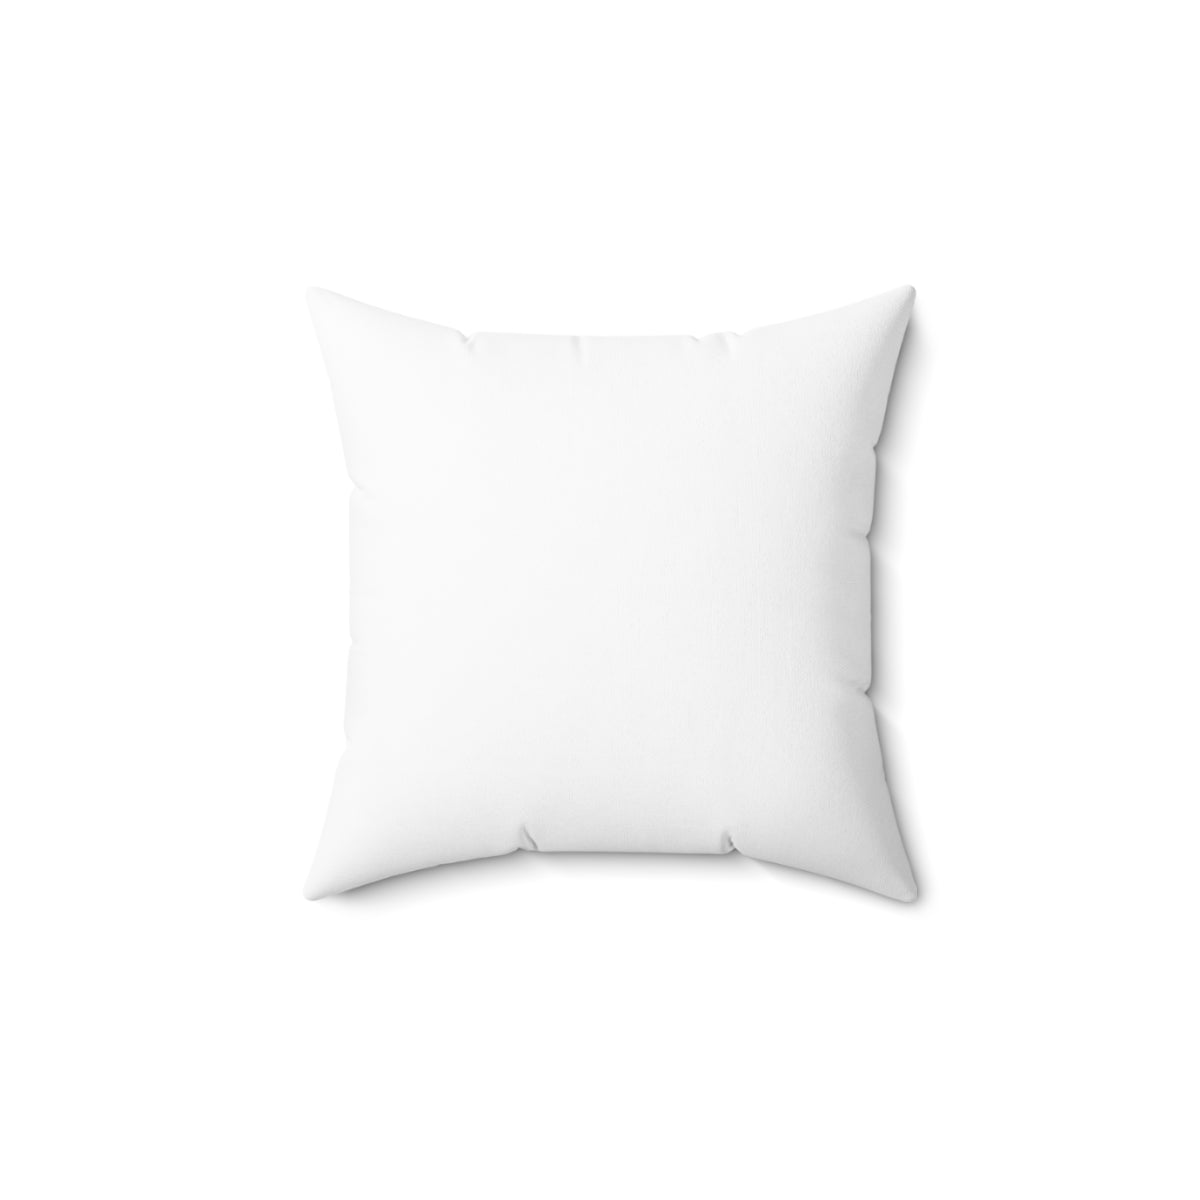 Affirmative “Dreams” Square Pillow